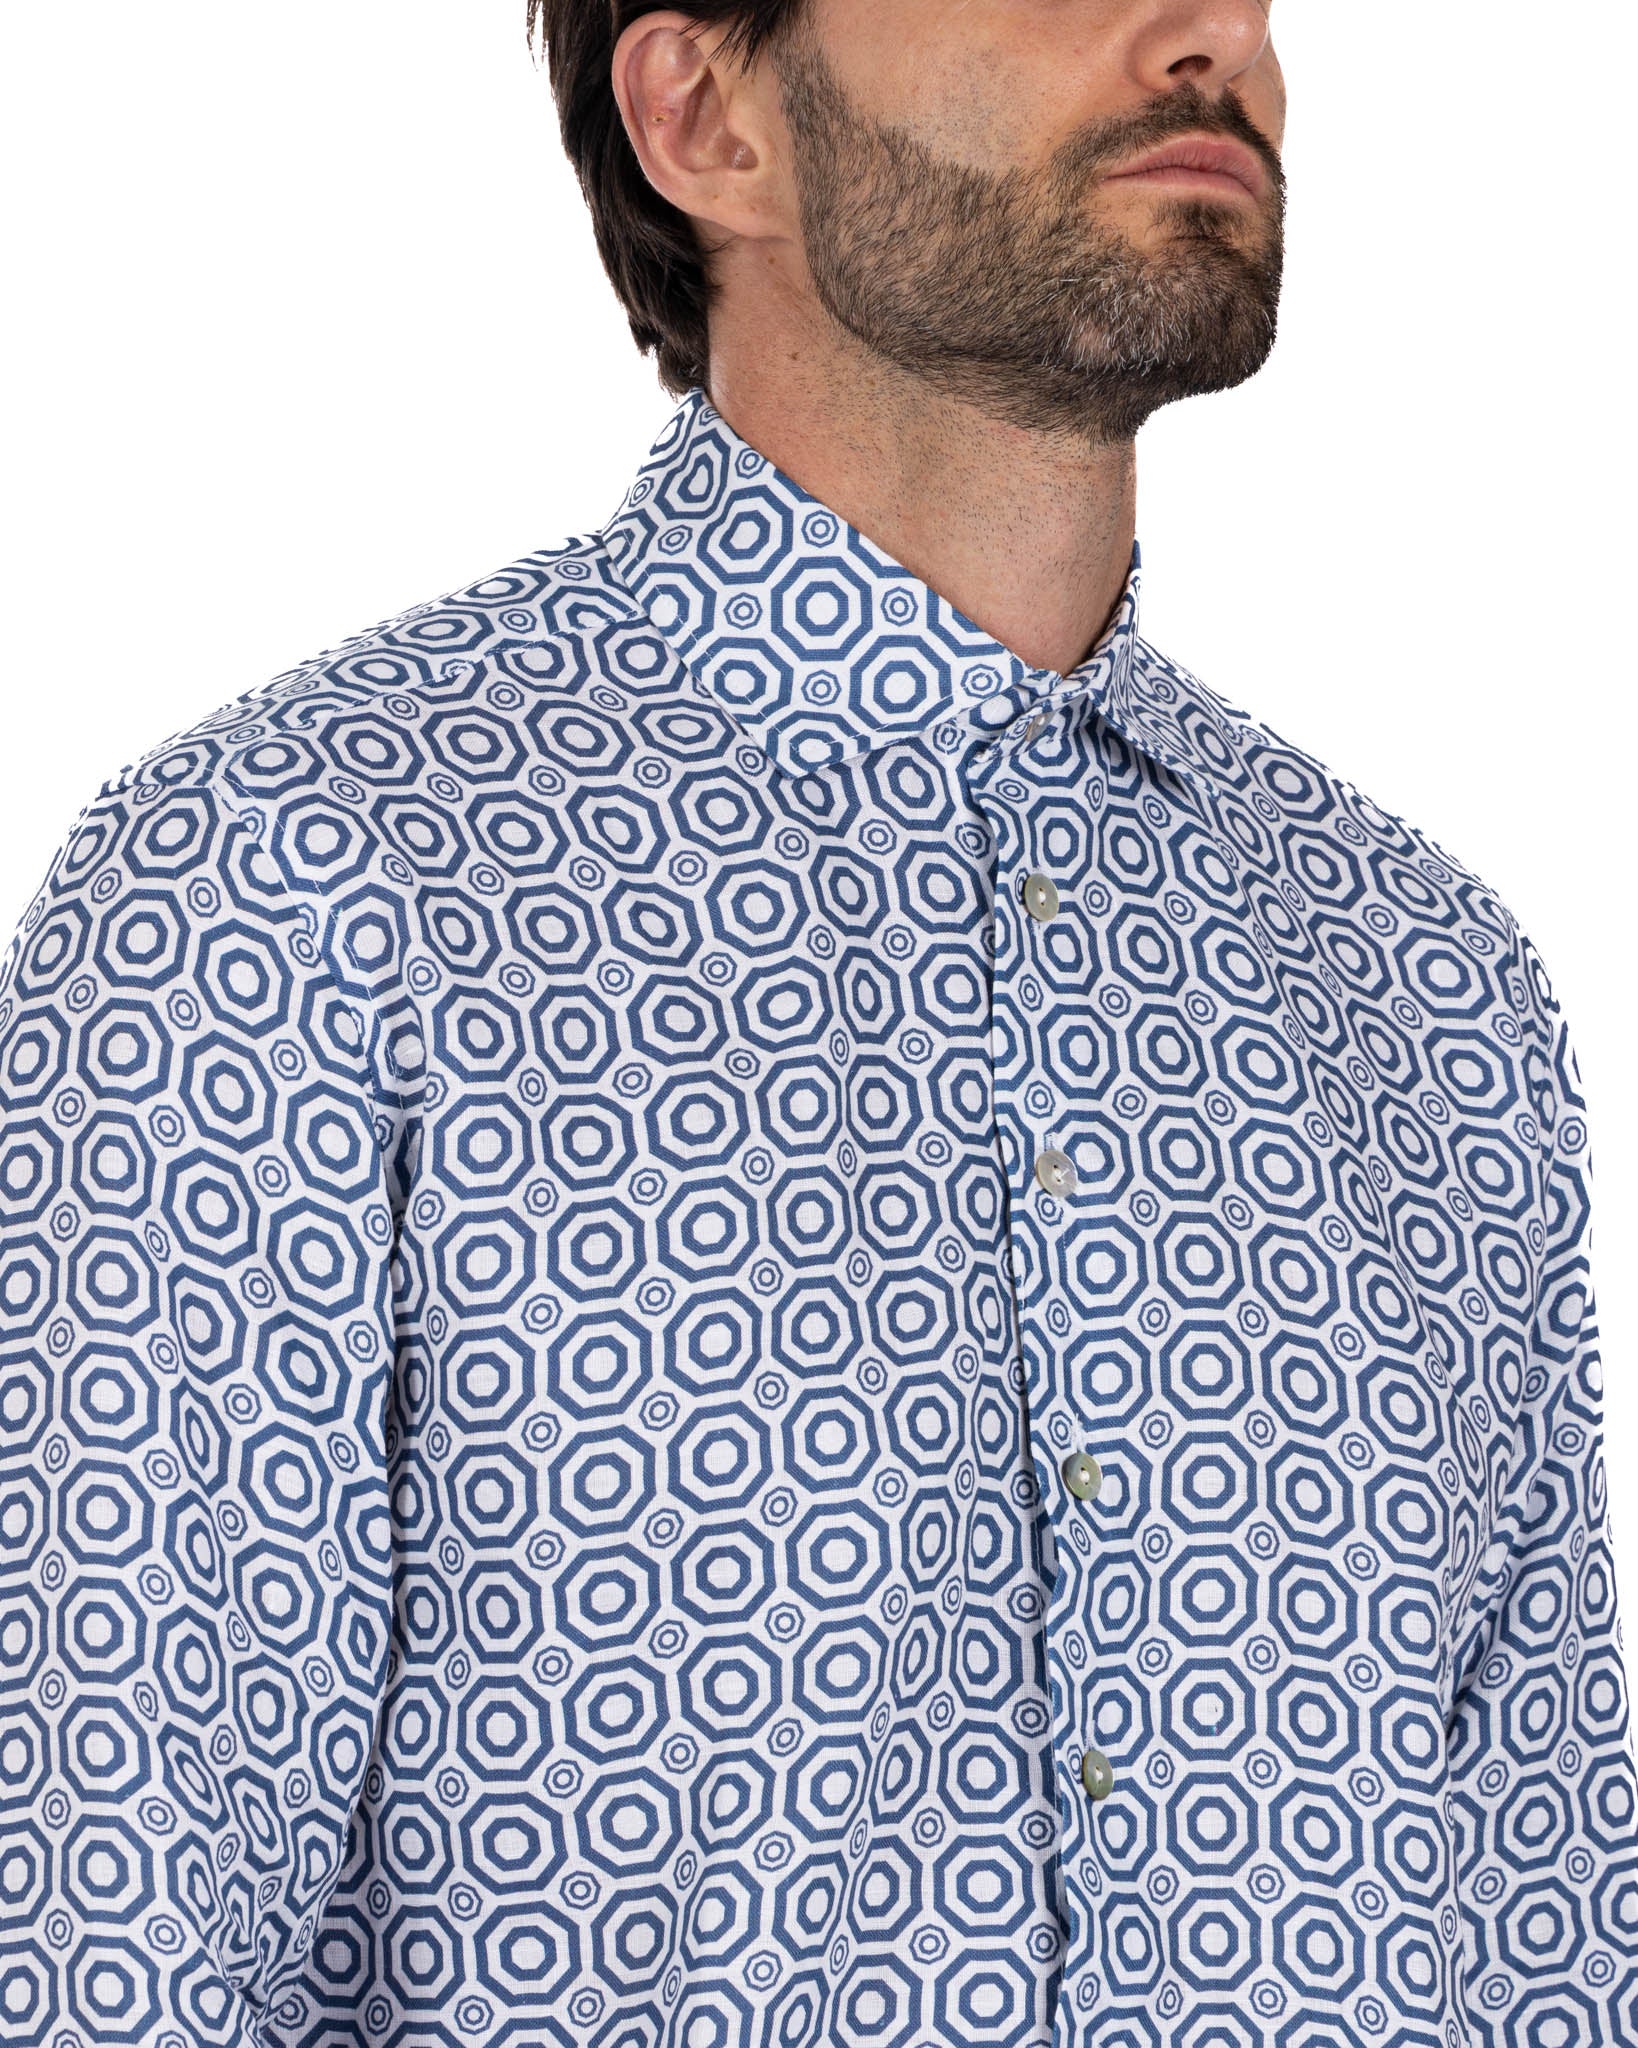 Maiolica - chemise en lin imprimé bleu